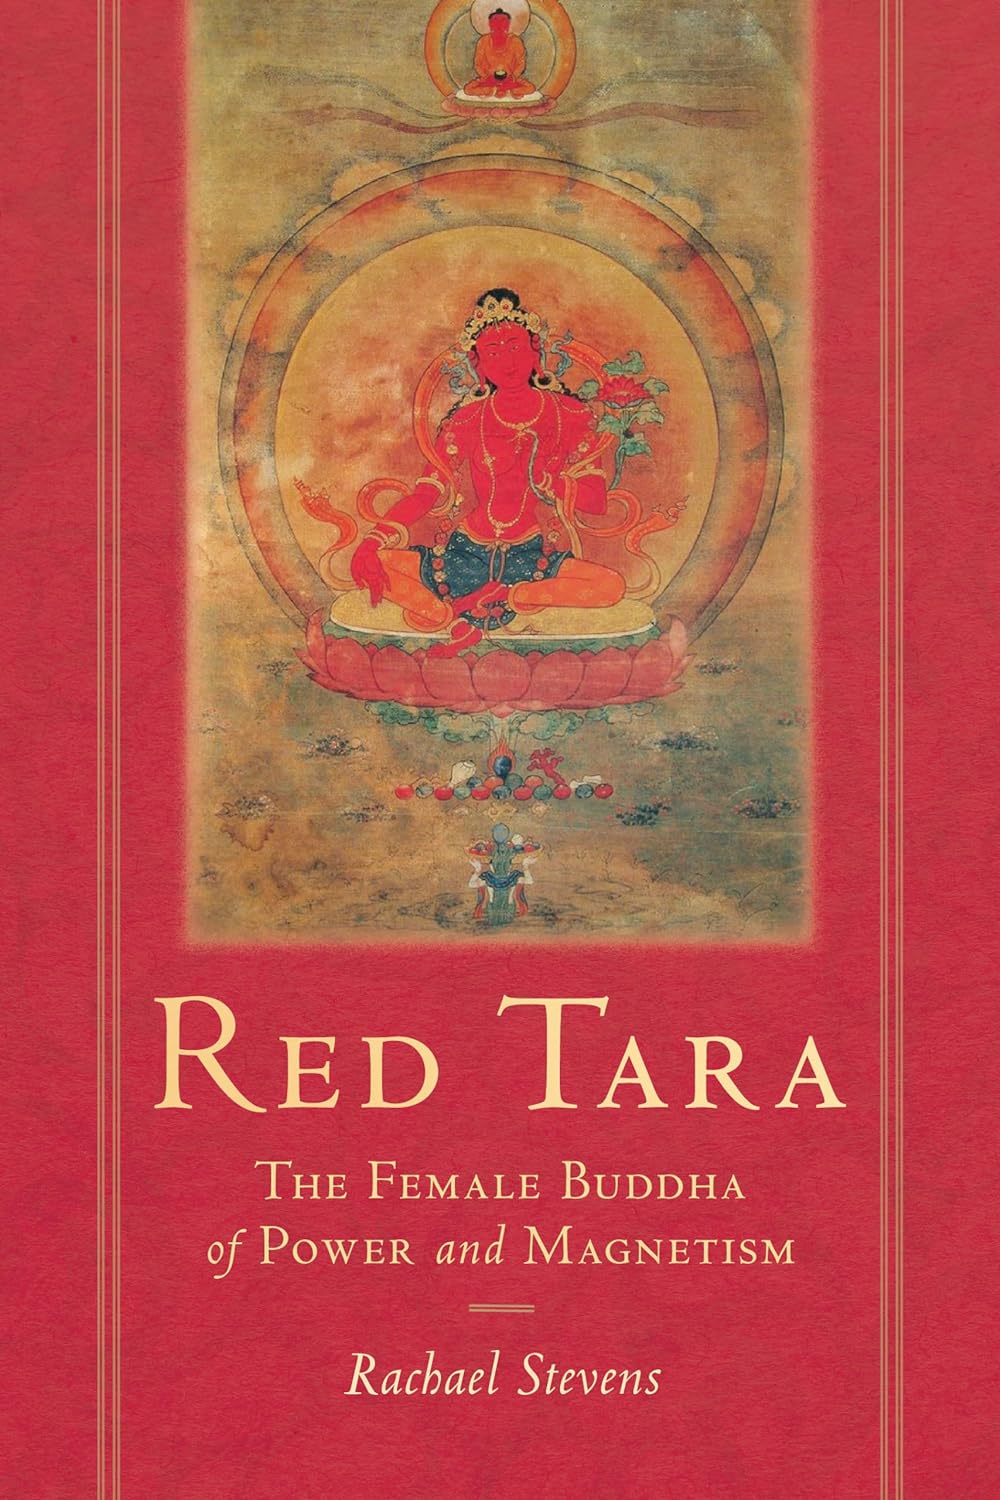 Red Tara The Female Buddha of Power and Magnetism - Rachael Stevens